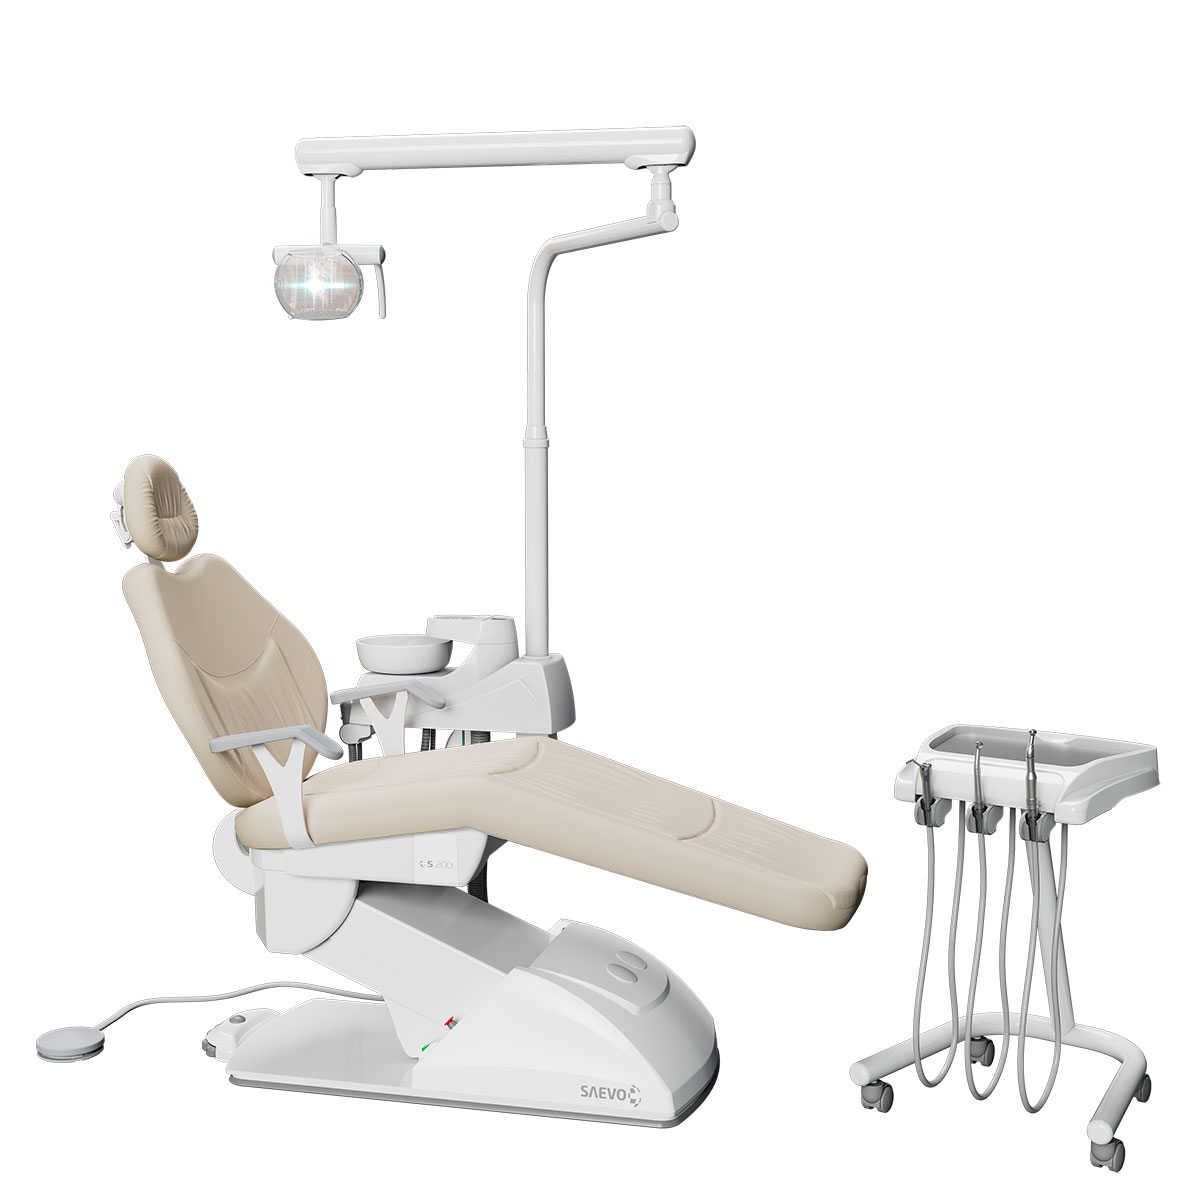 Consultório Odontológico – S201 C